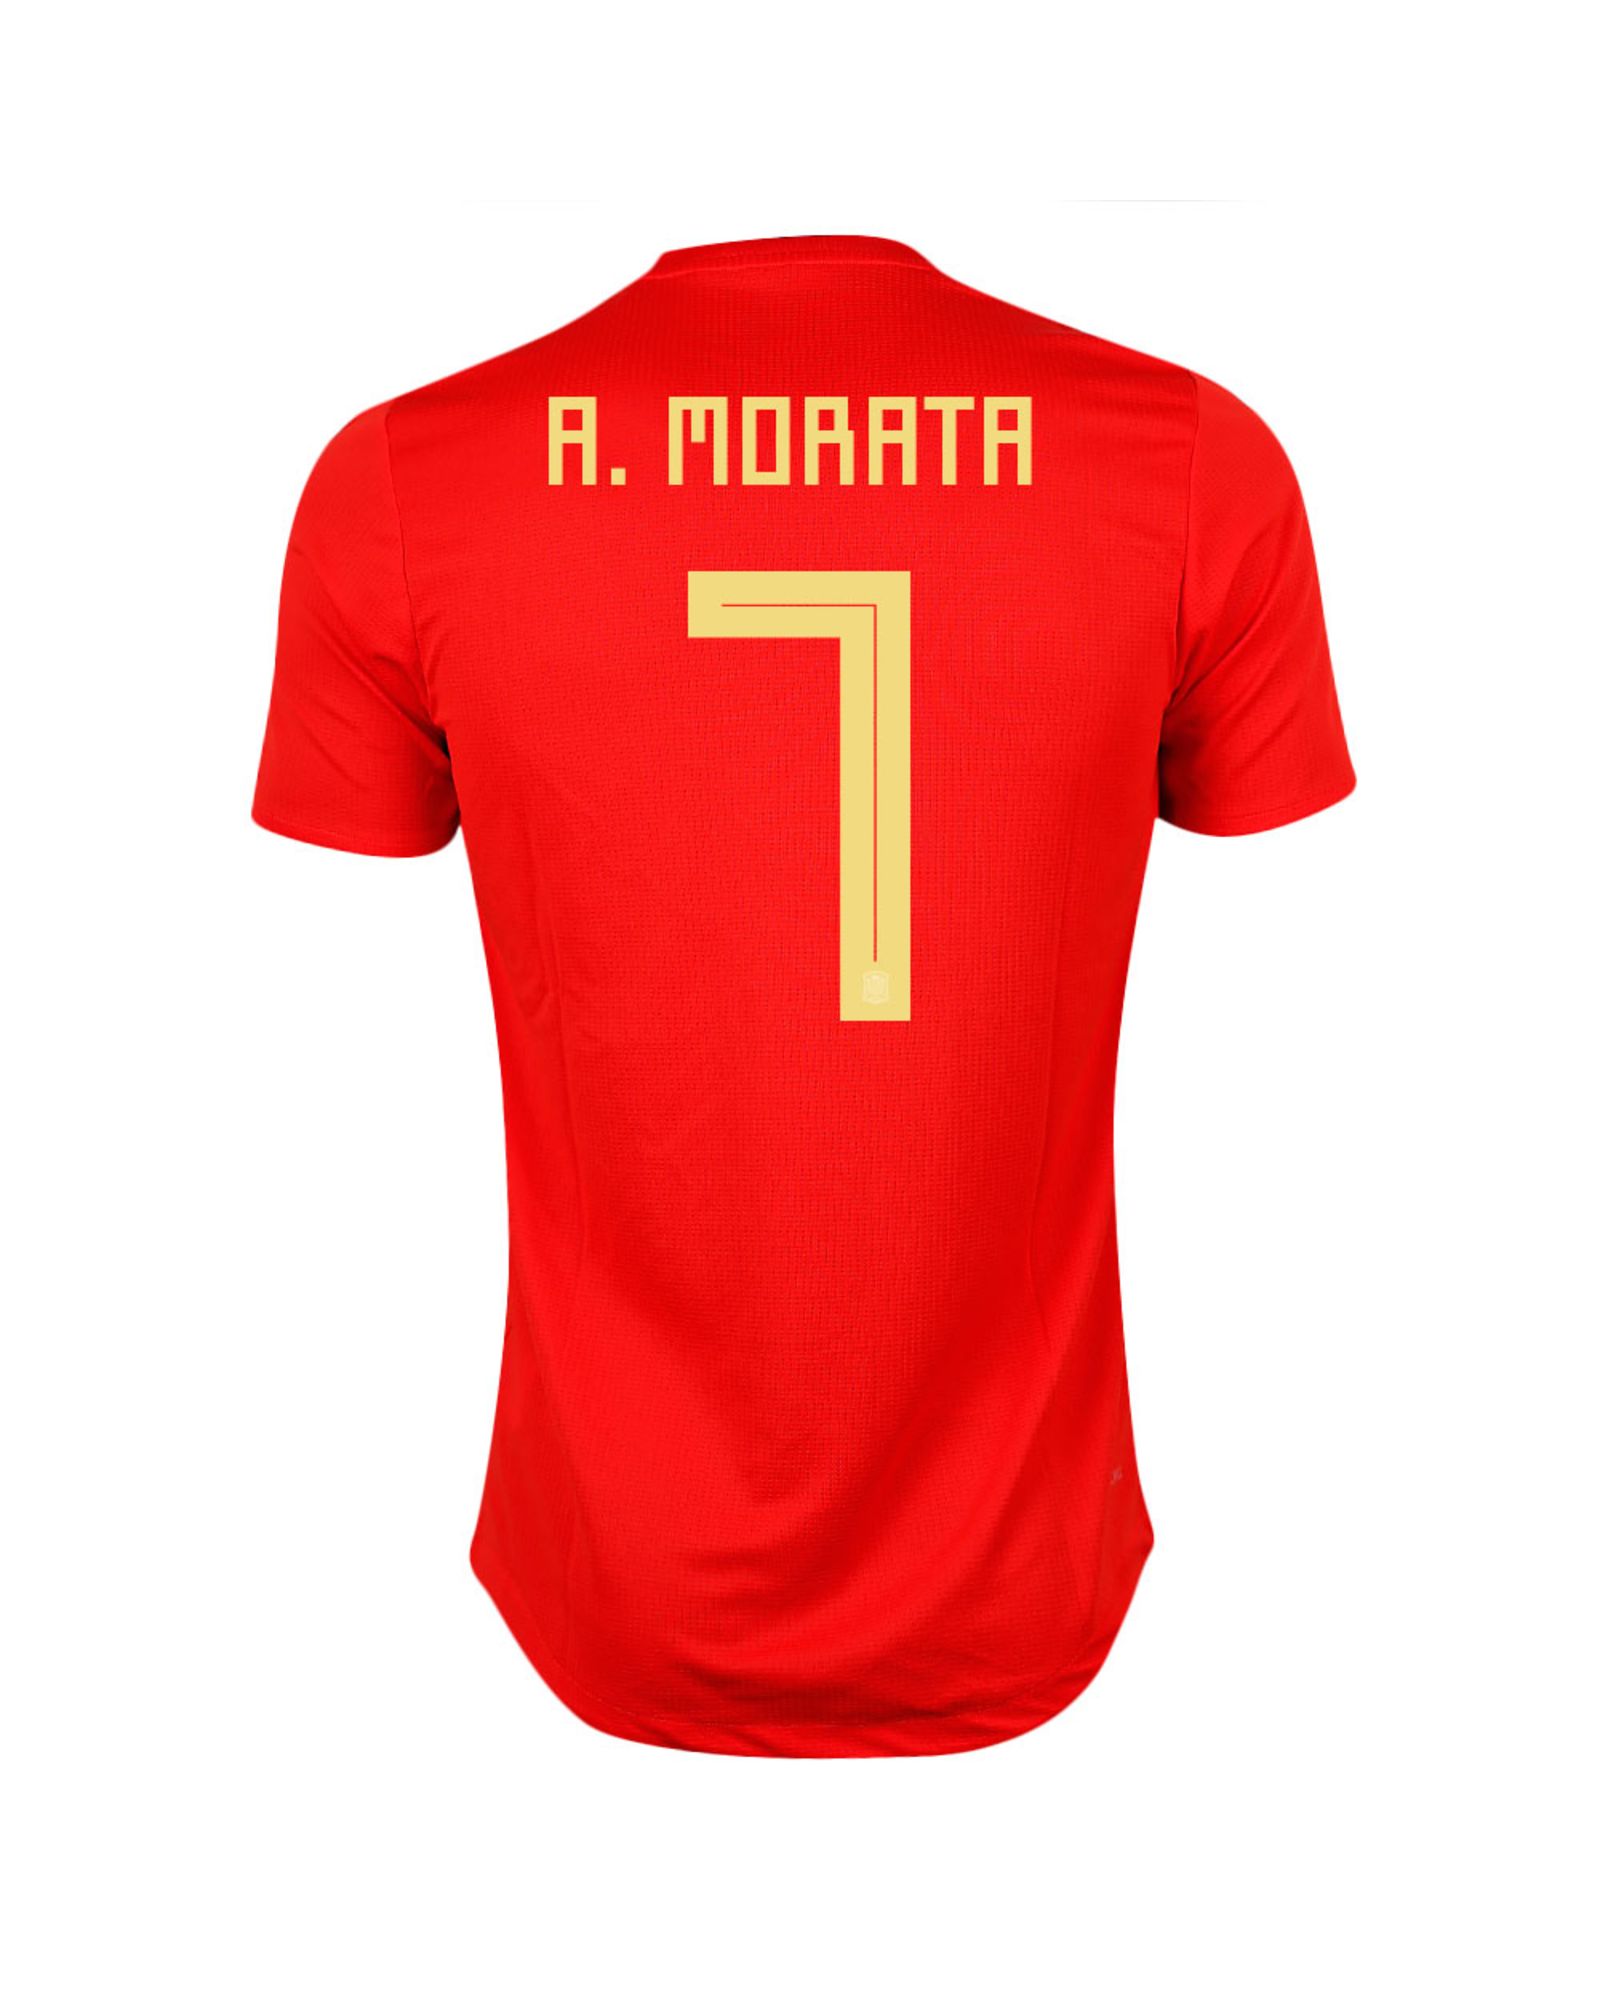 Camiseta 1ª España Mundial 2018 Morata Authentic Rojo - Fútbol Factory